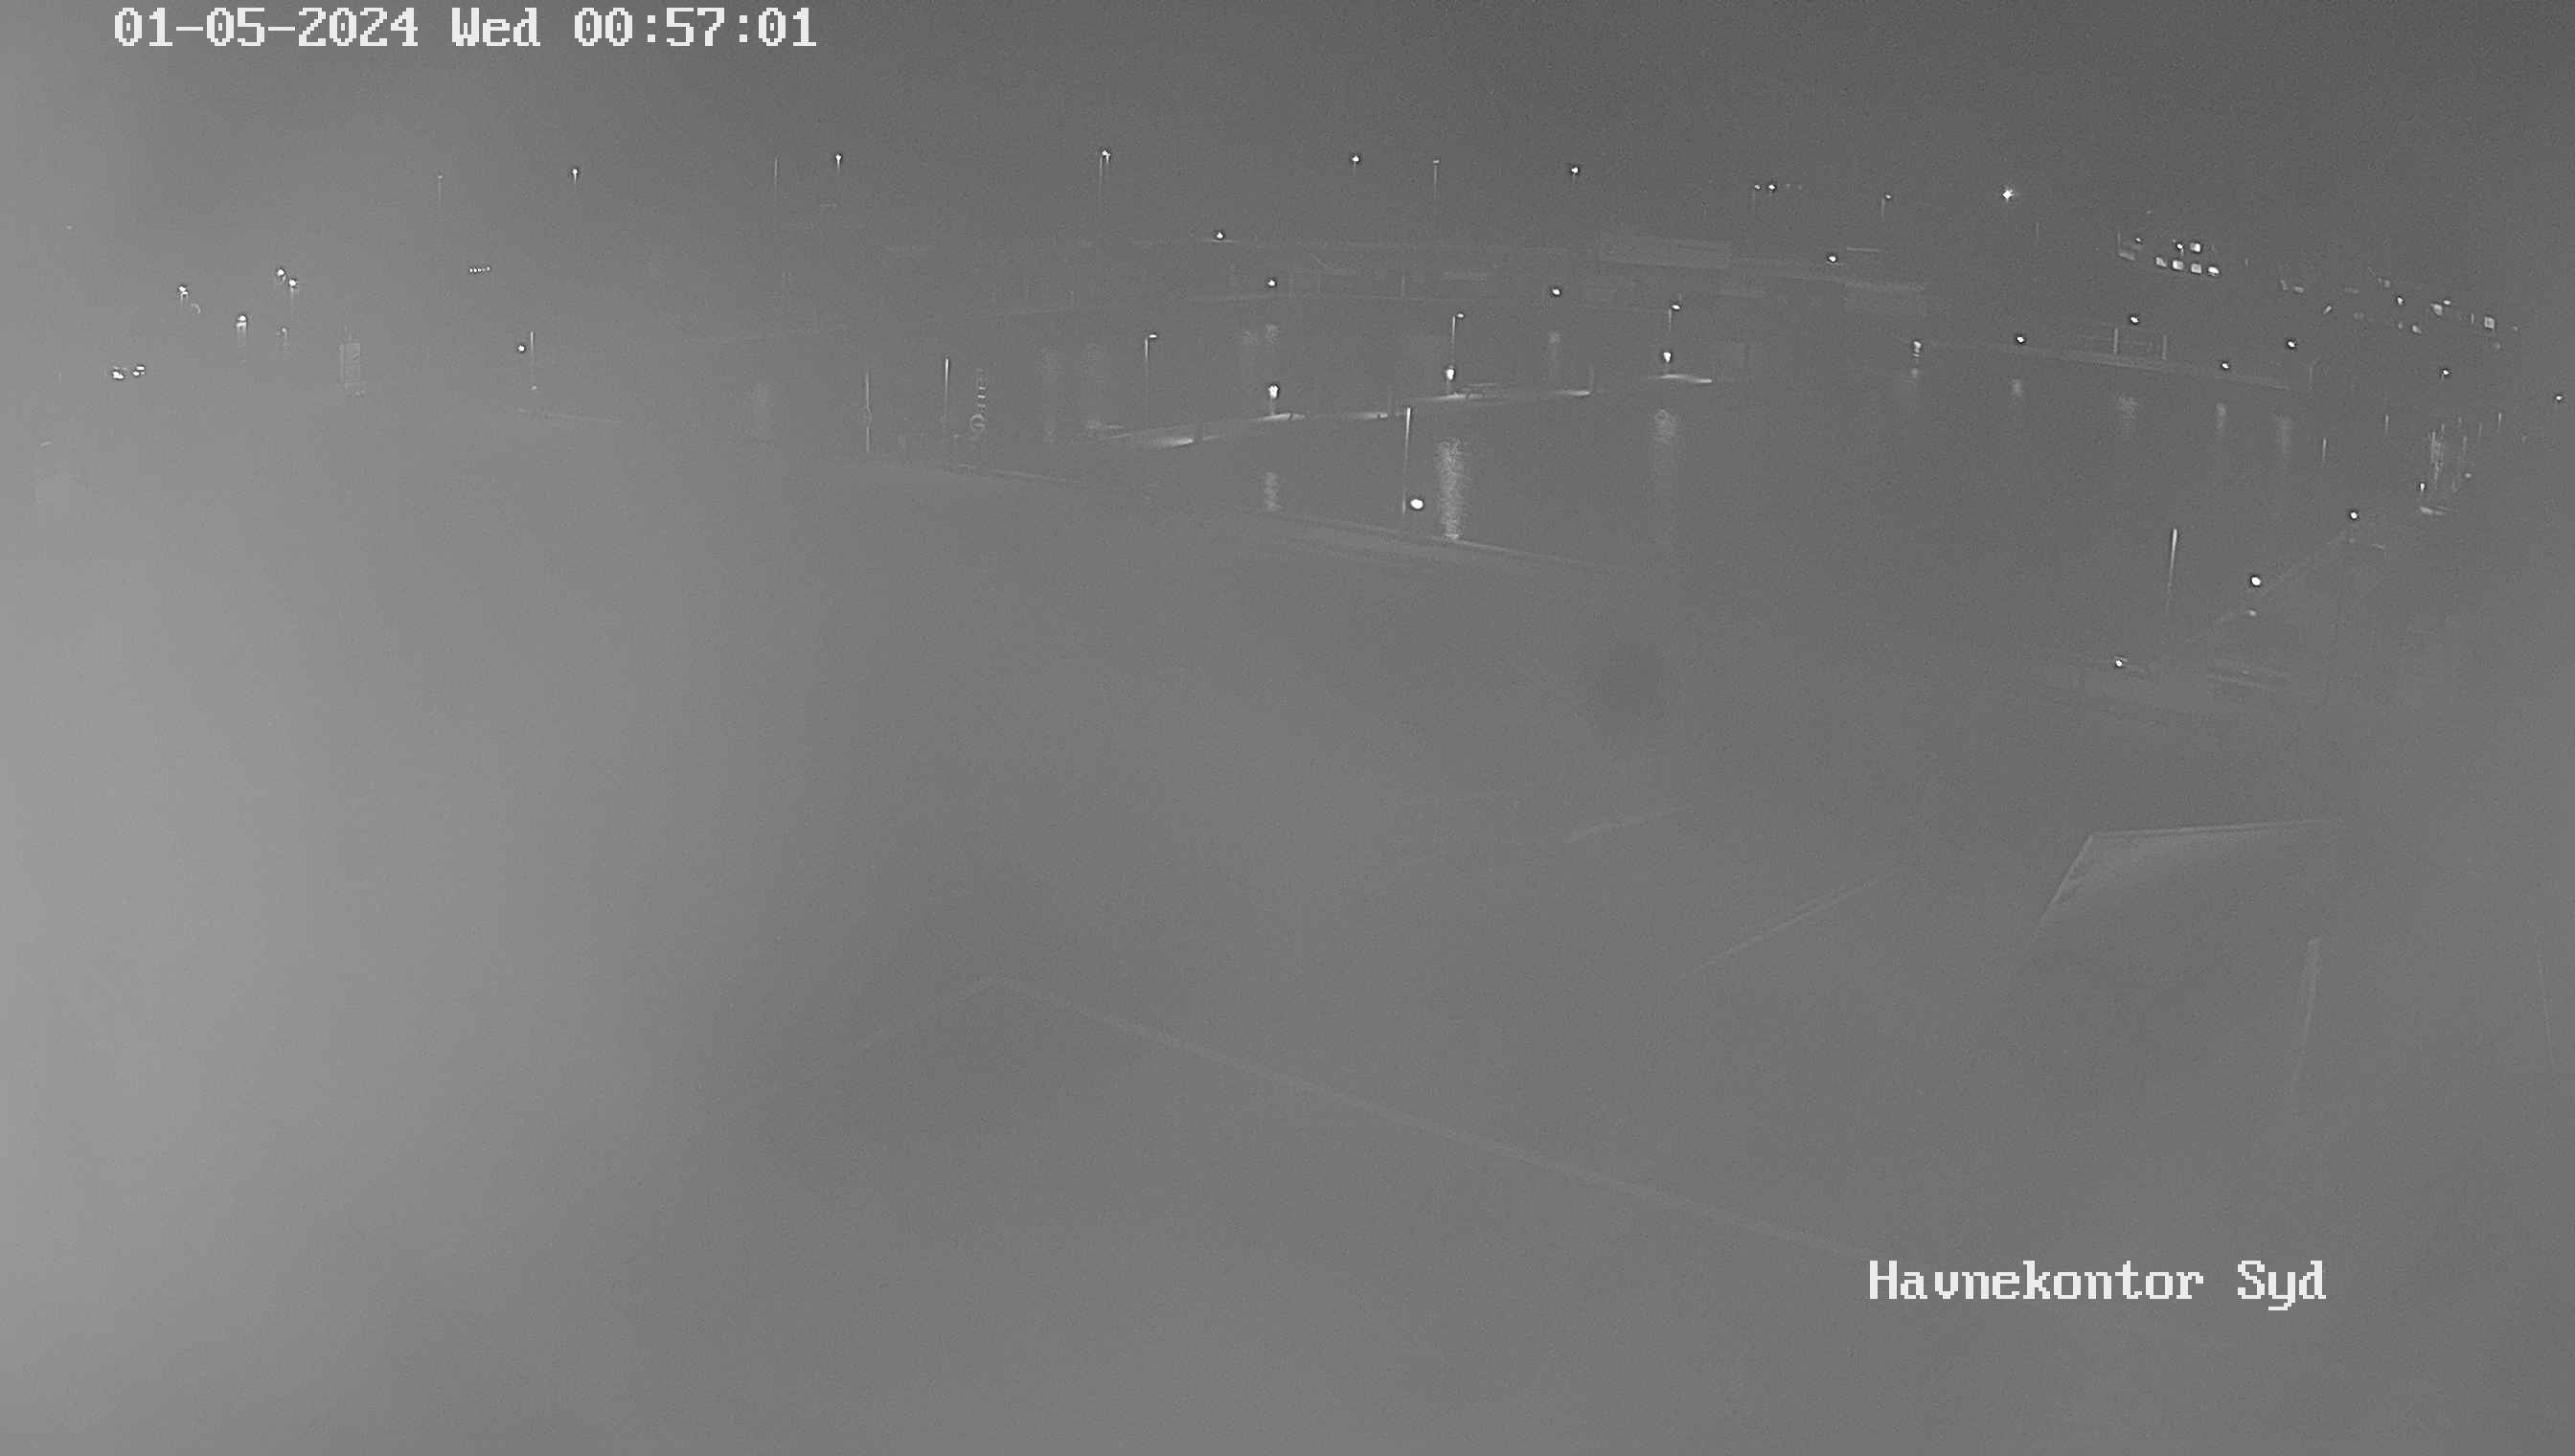 Vesterø Havn (Læsø) Mon. 00:58